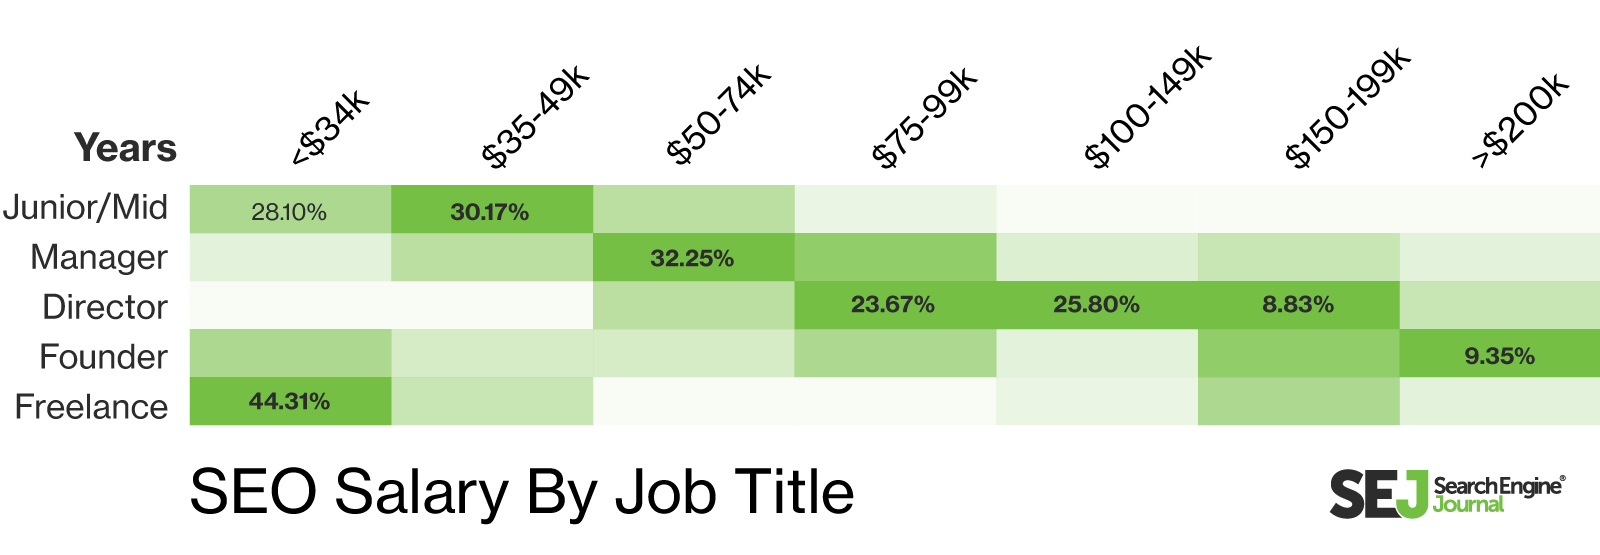 SEO Salary by Job Title